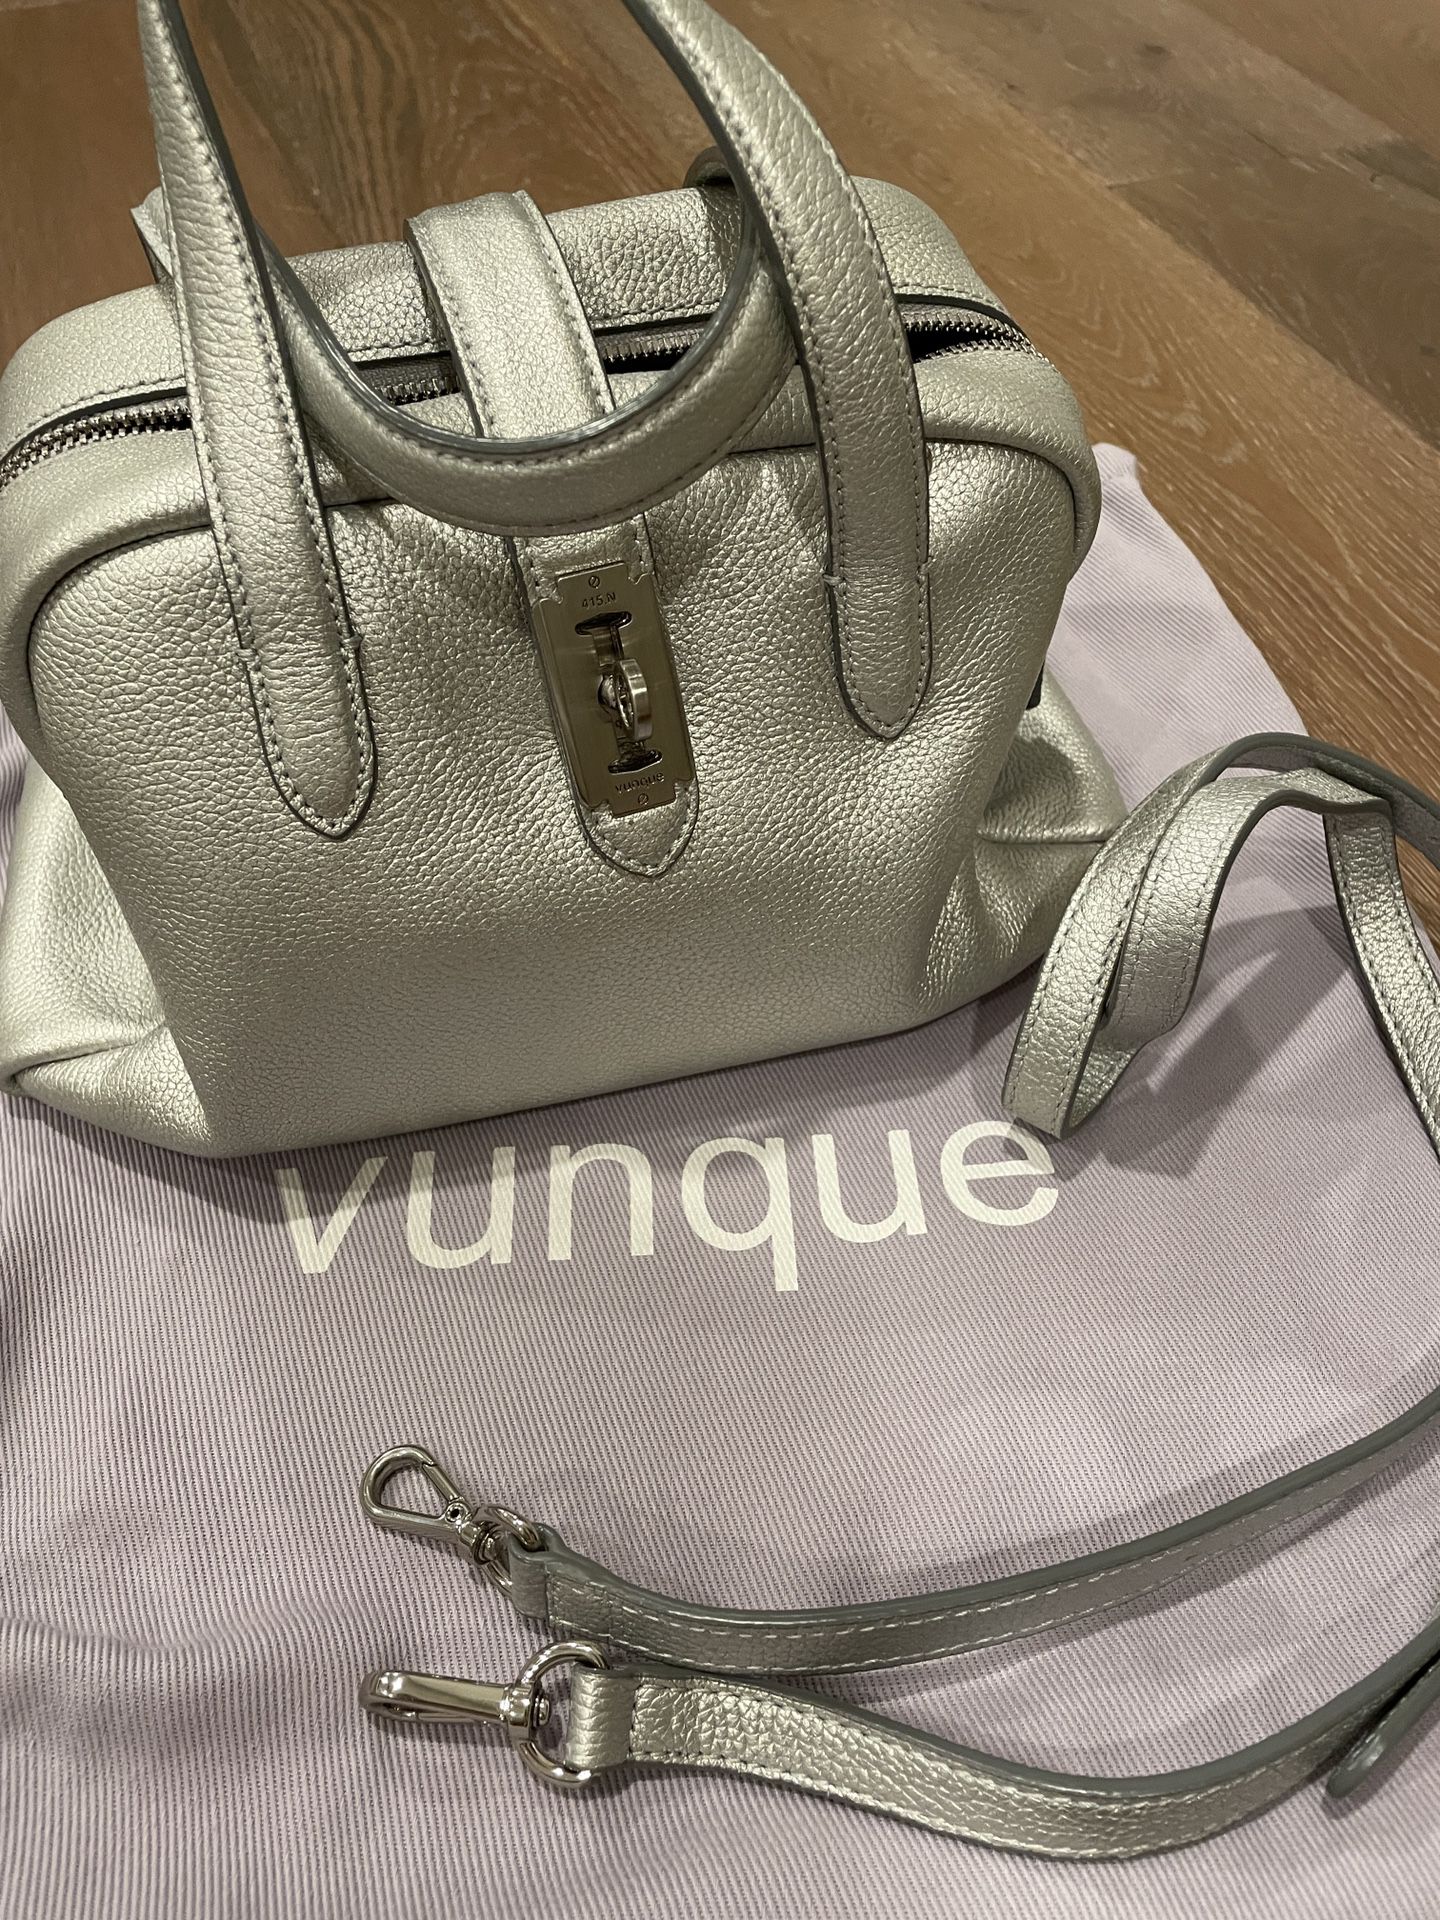 Vunque Shoulder&tote Bag(Made In Korea)